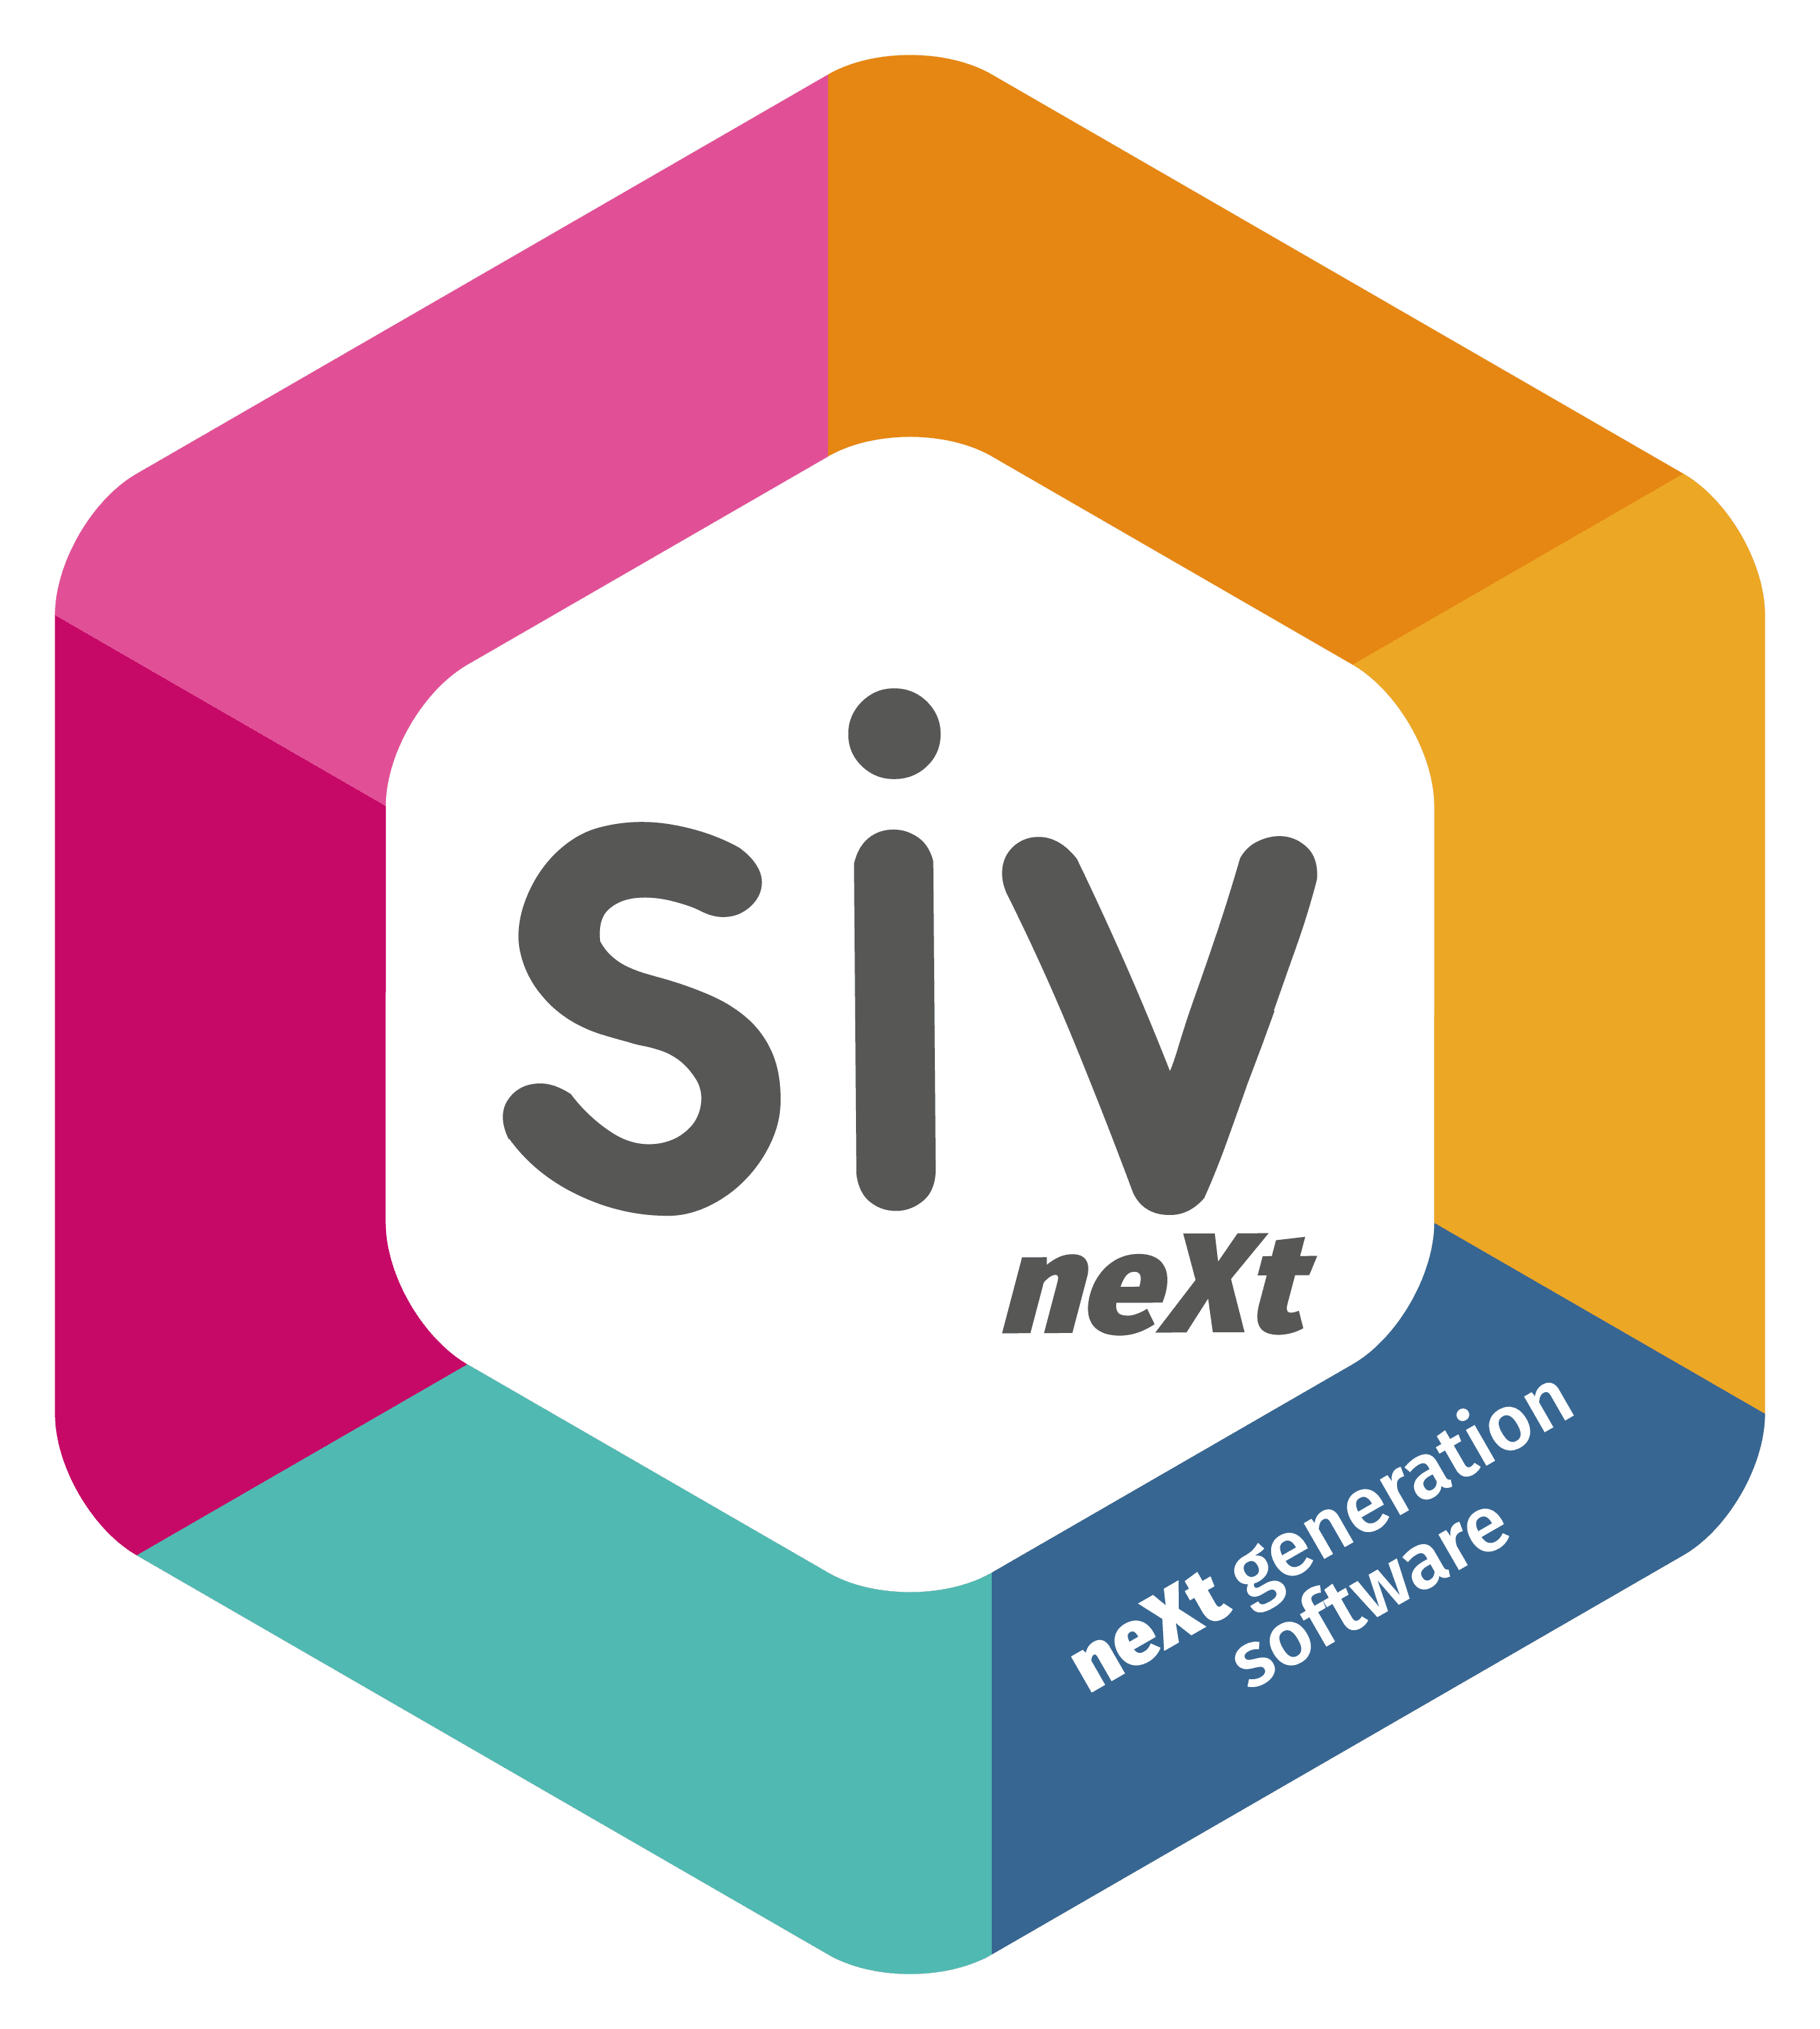 Logo SIV NEXT INFORMATICA VALDINIEVOLE